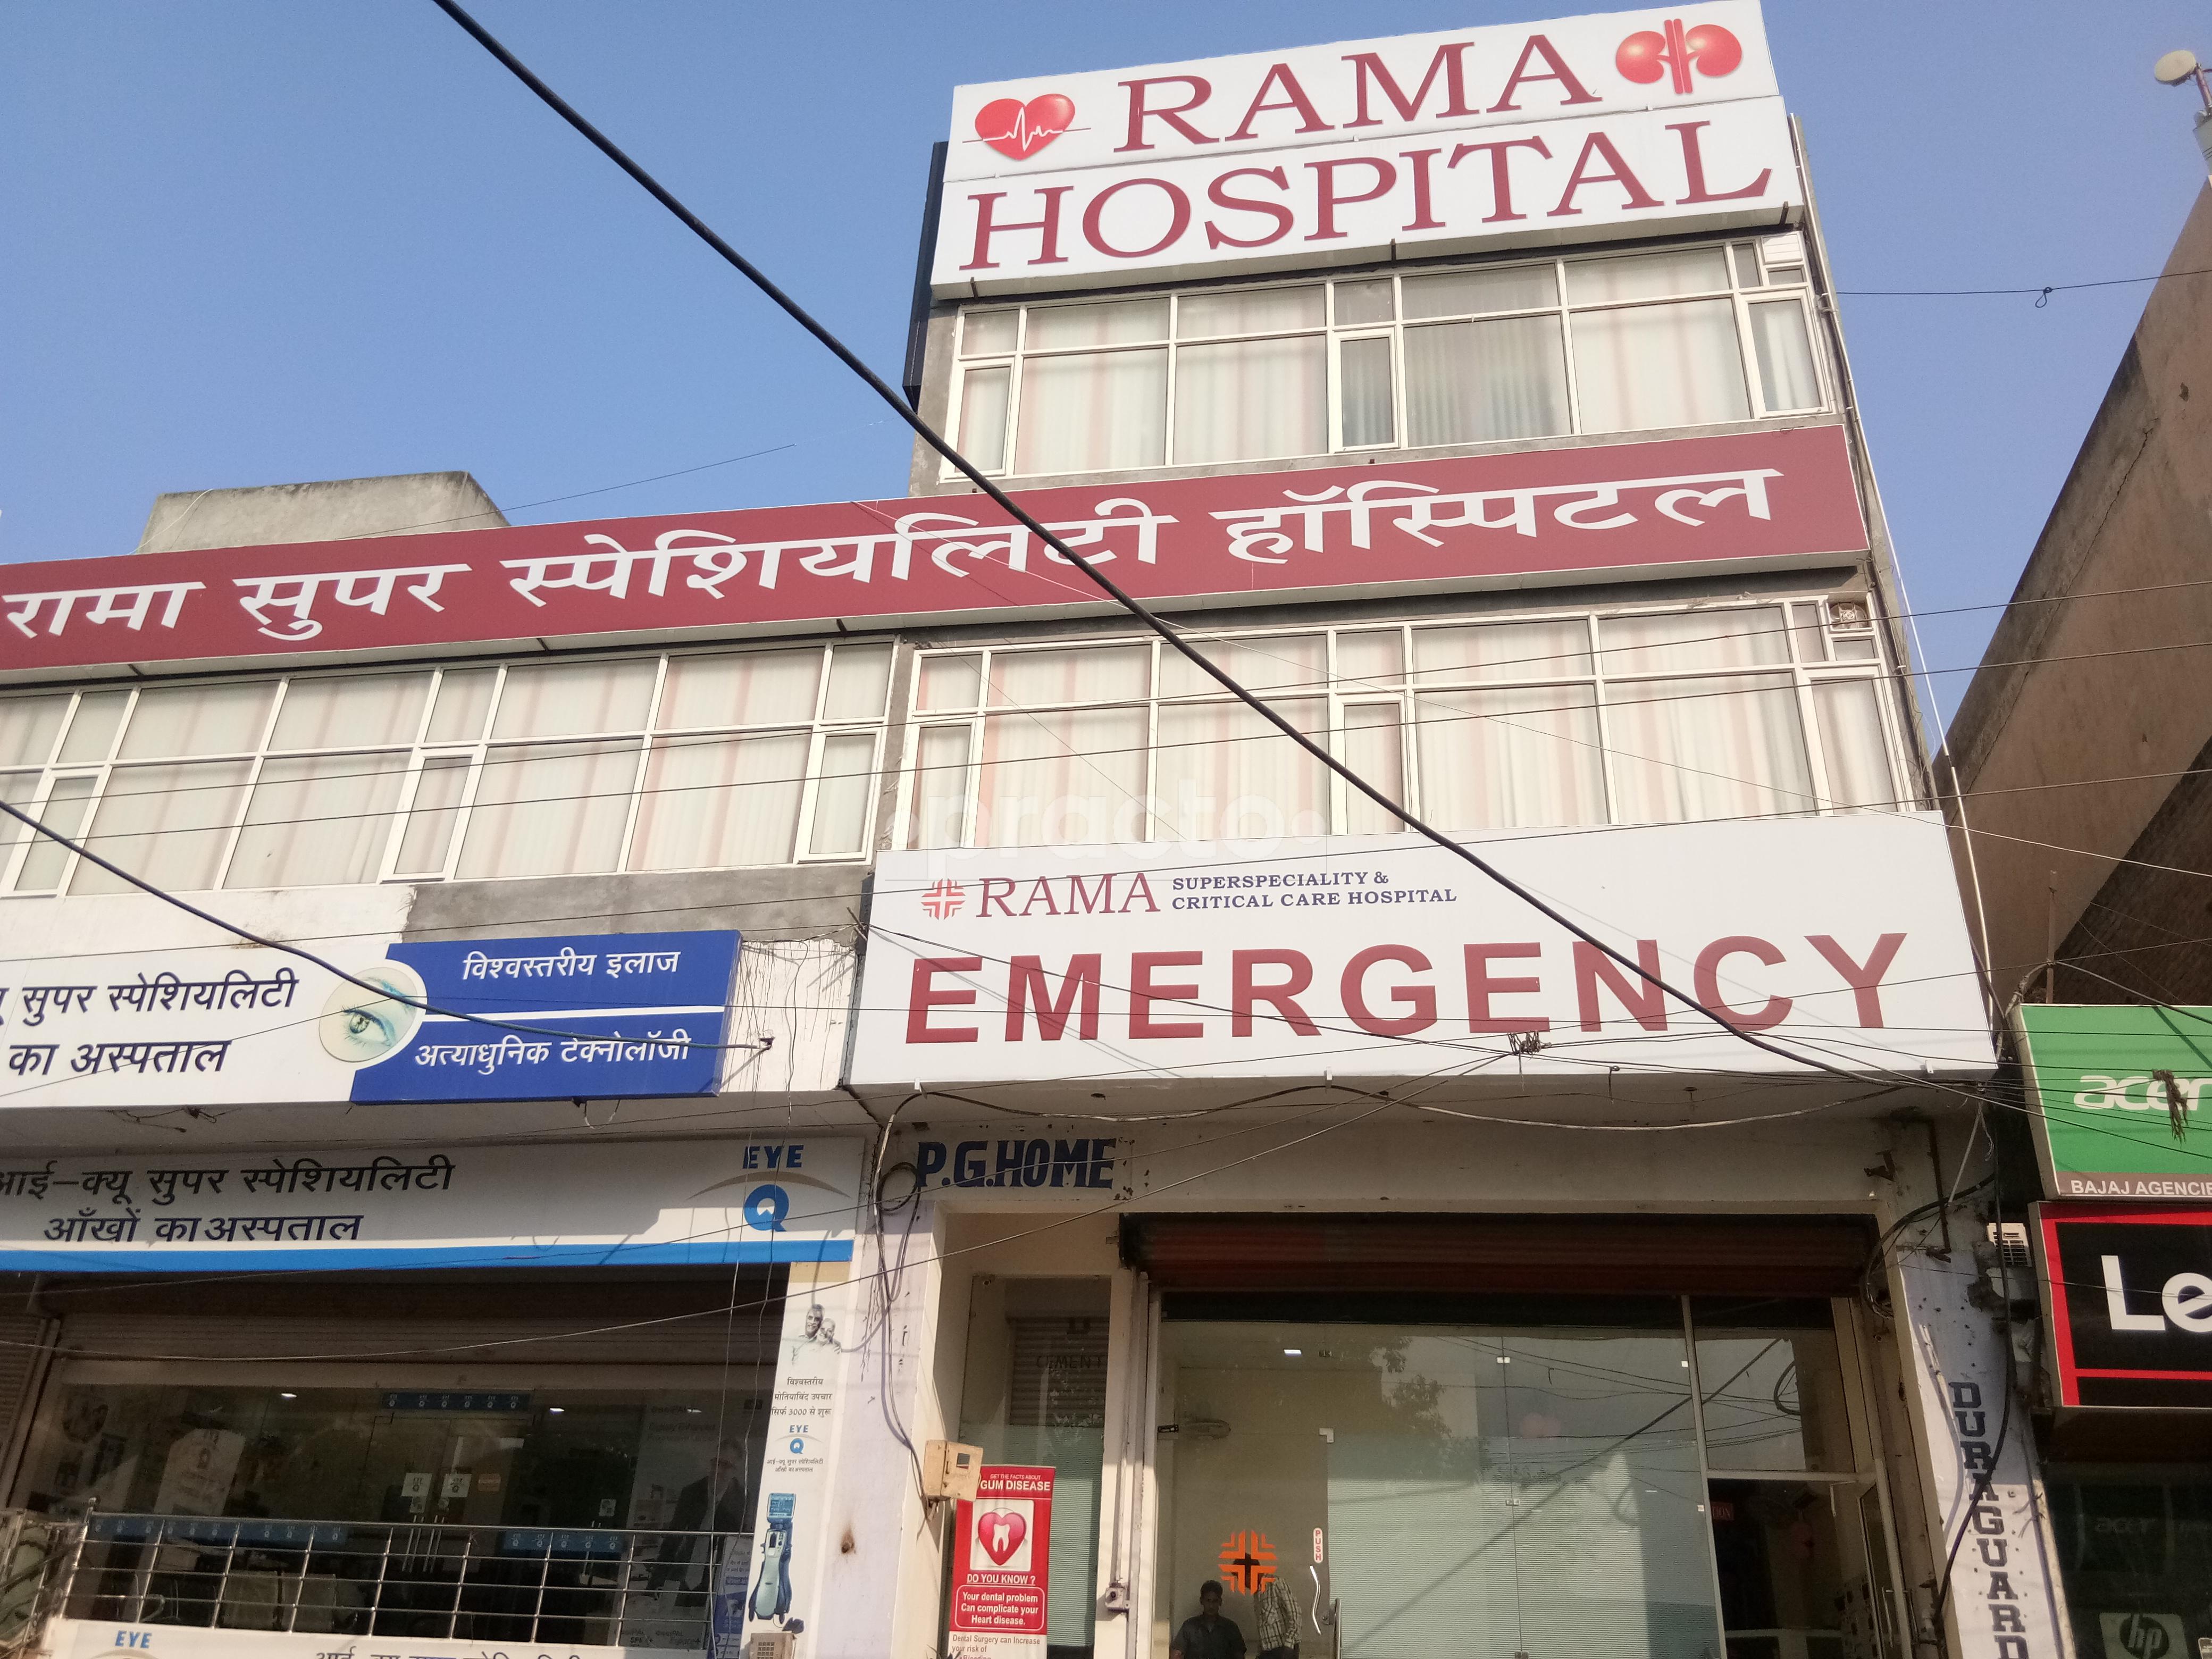 Rama Super Speciality Hospital|Clinics|Medical Services